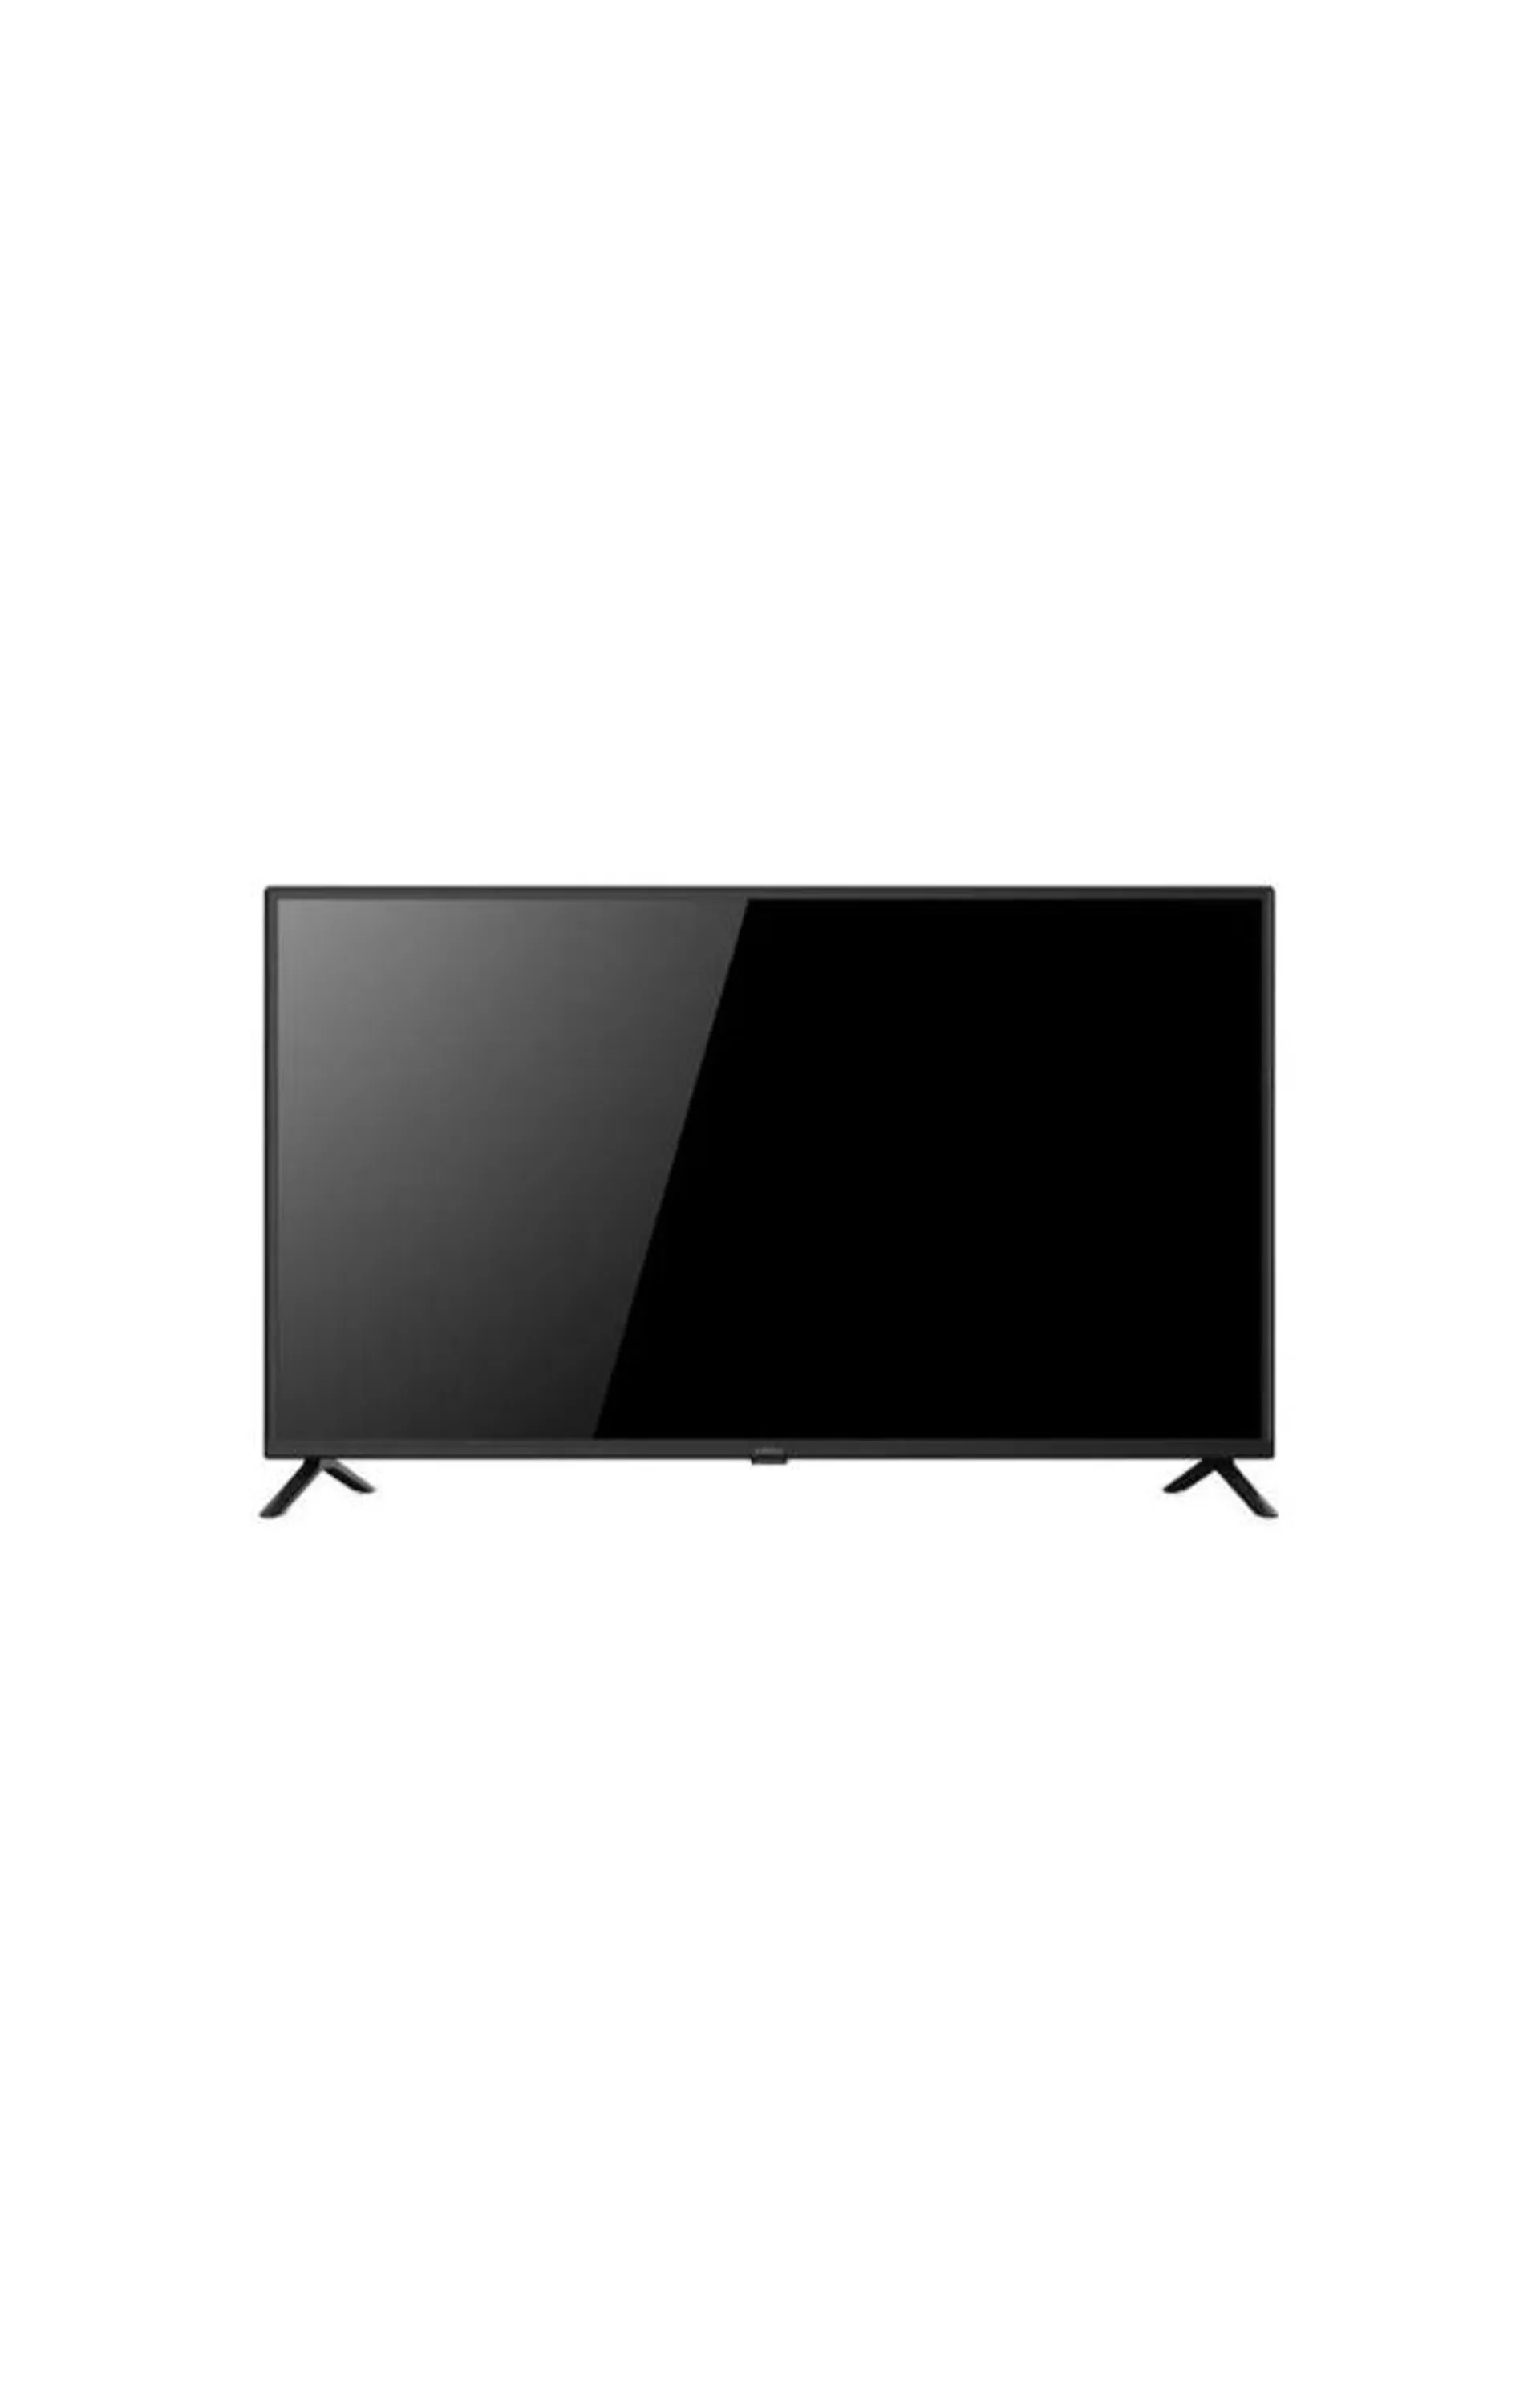 TV Simply Turn On 42" LED Fhd Smart TV SYLED421iX